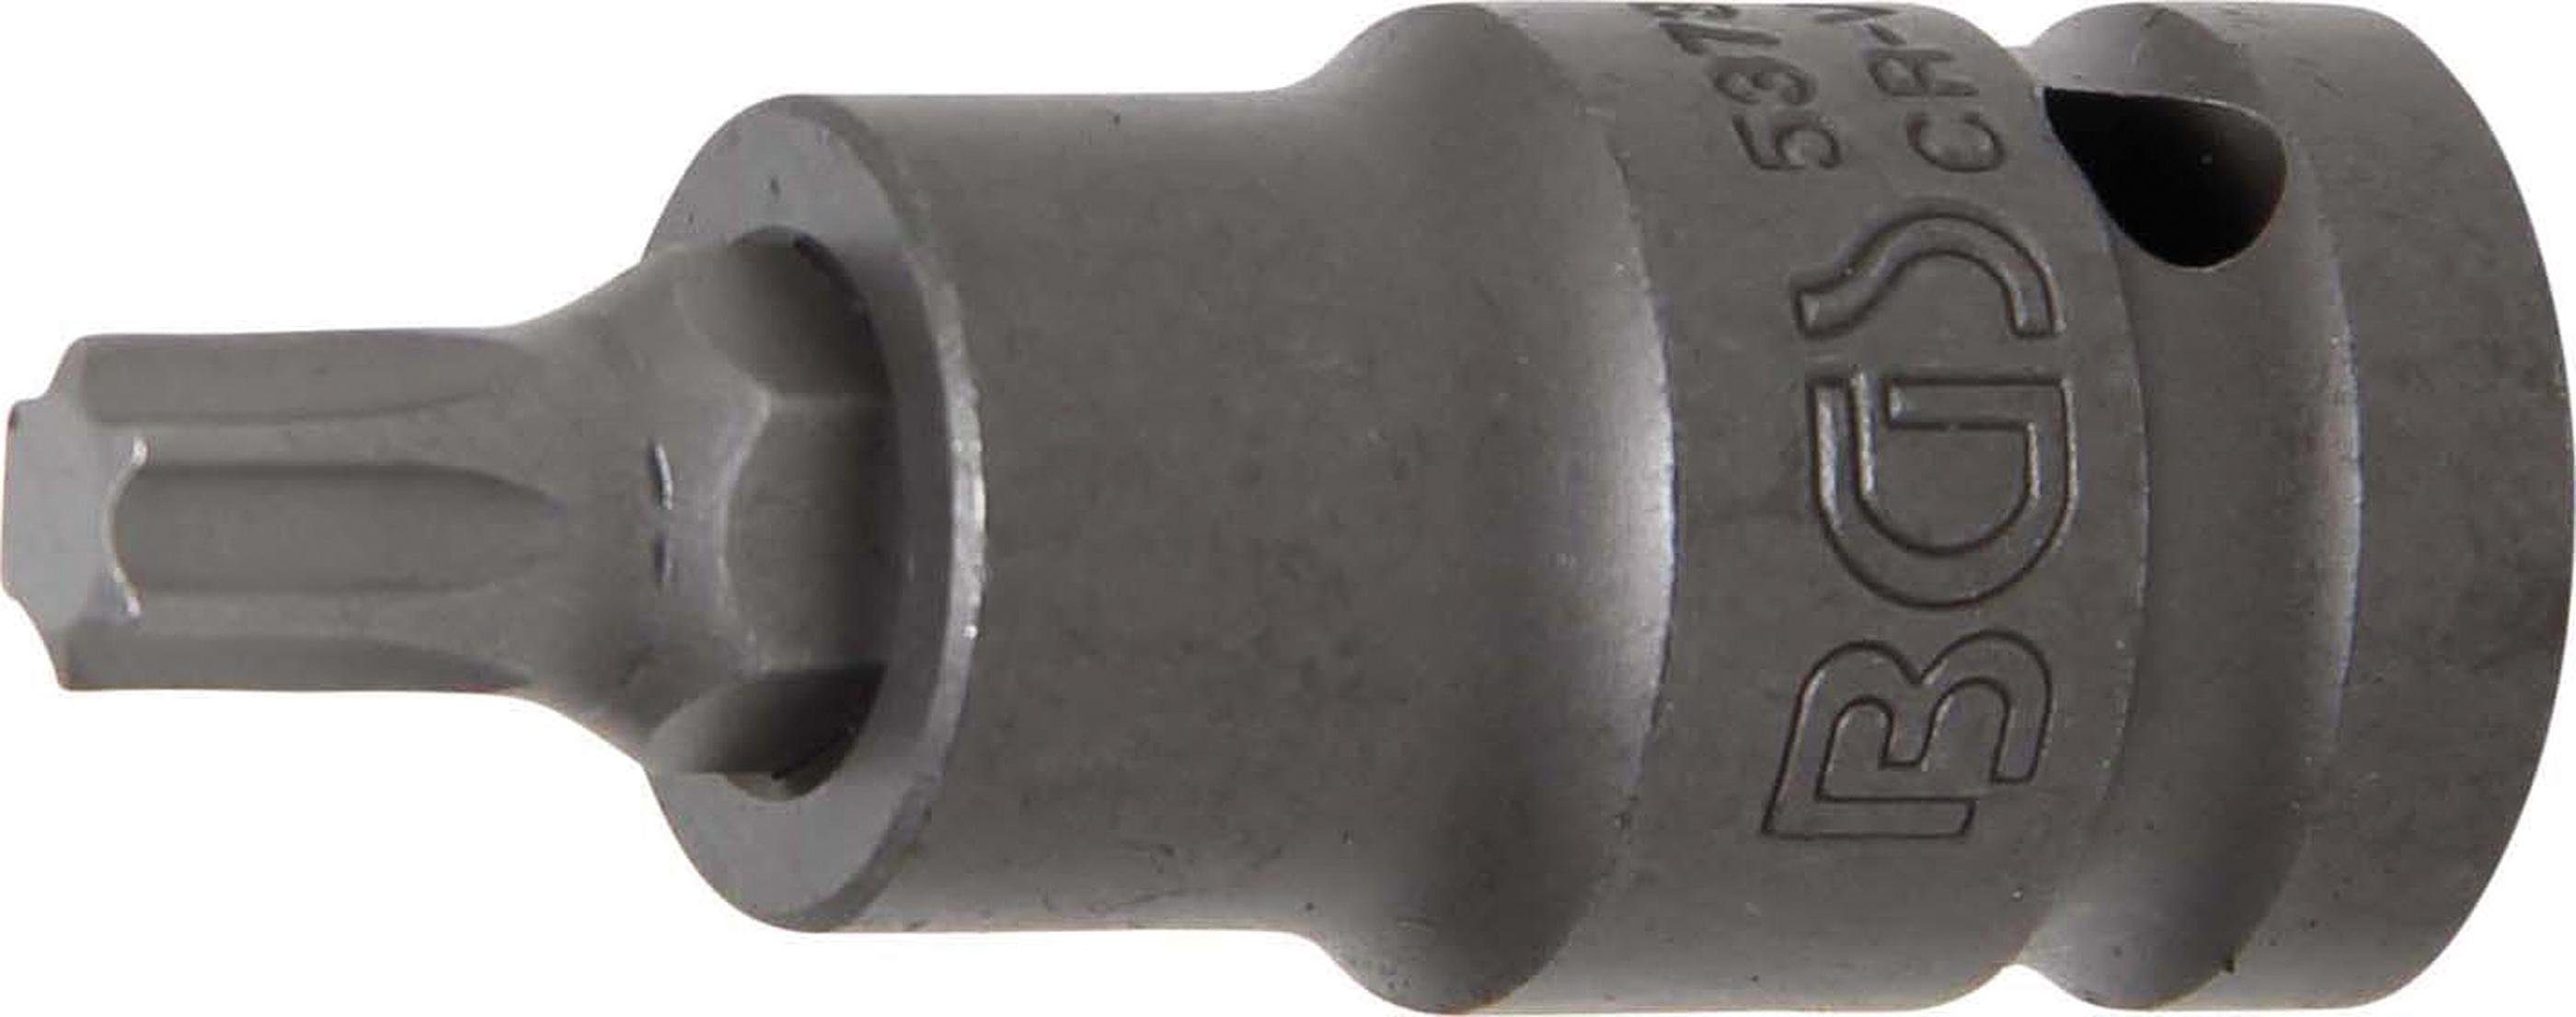 Innenvierkant T-Profil (für mm Torx) T45 Antrieb BGS (1/2), Kraft-Bit-Einsatz, technic Bit-Schraubendreher 12,5